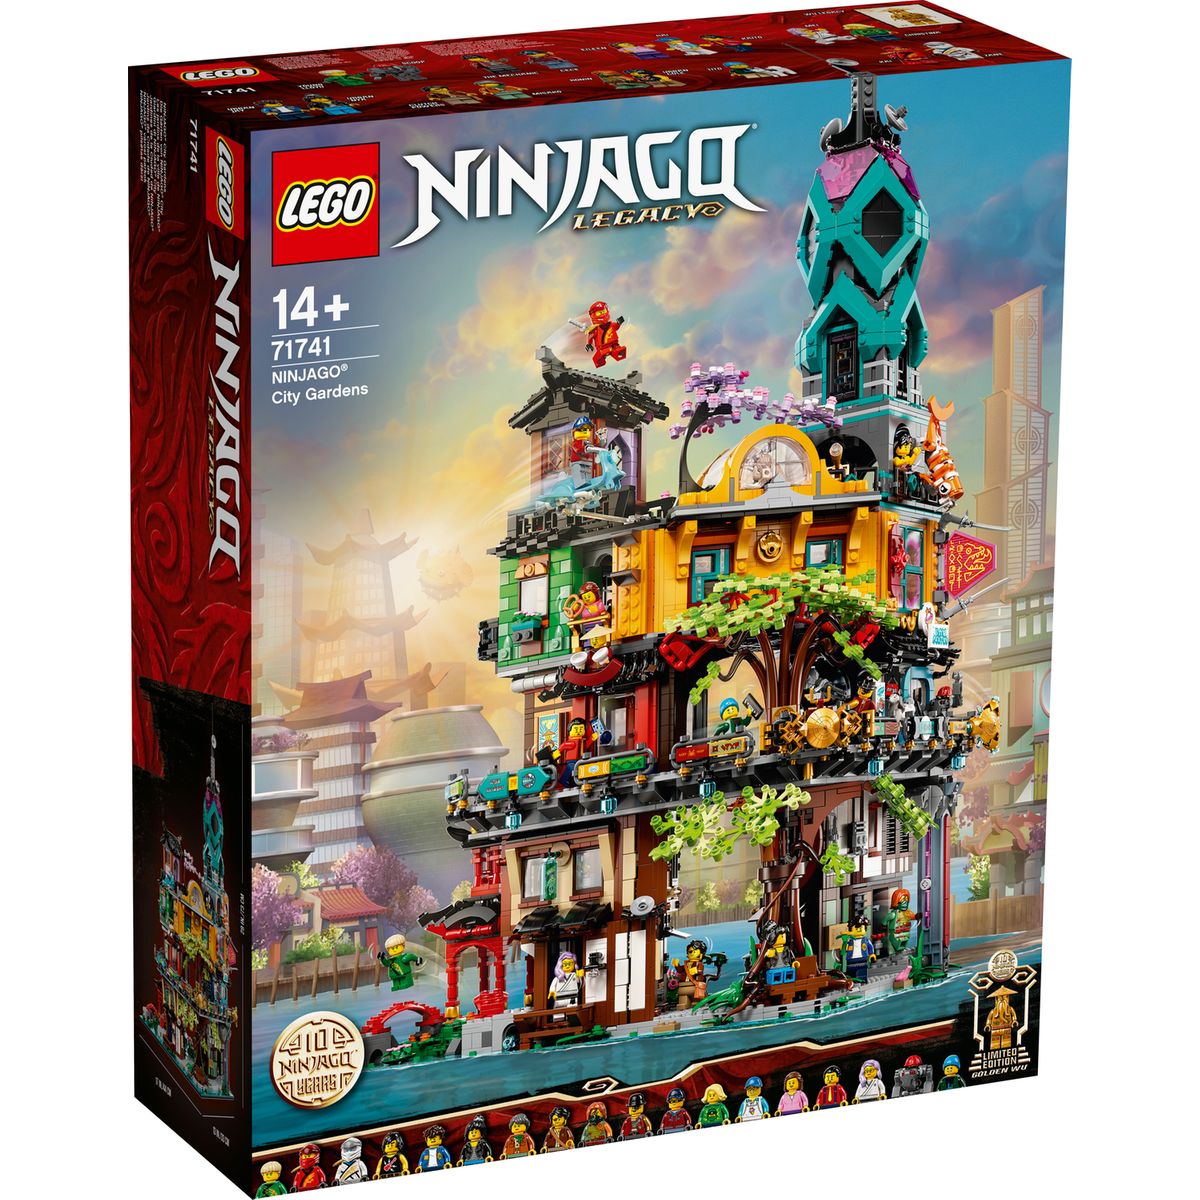 Les jardins de la ville de ninjago® Lego